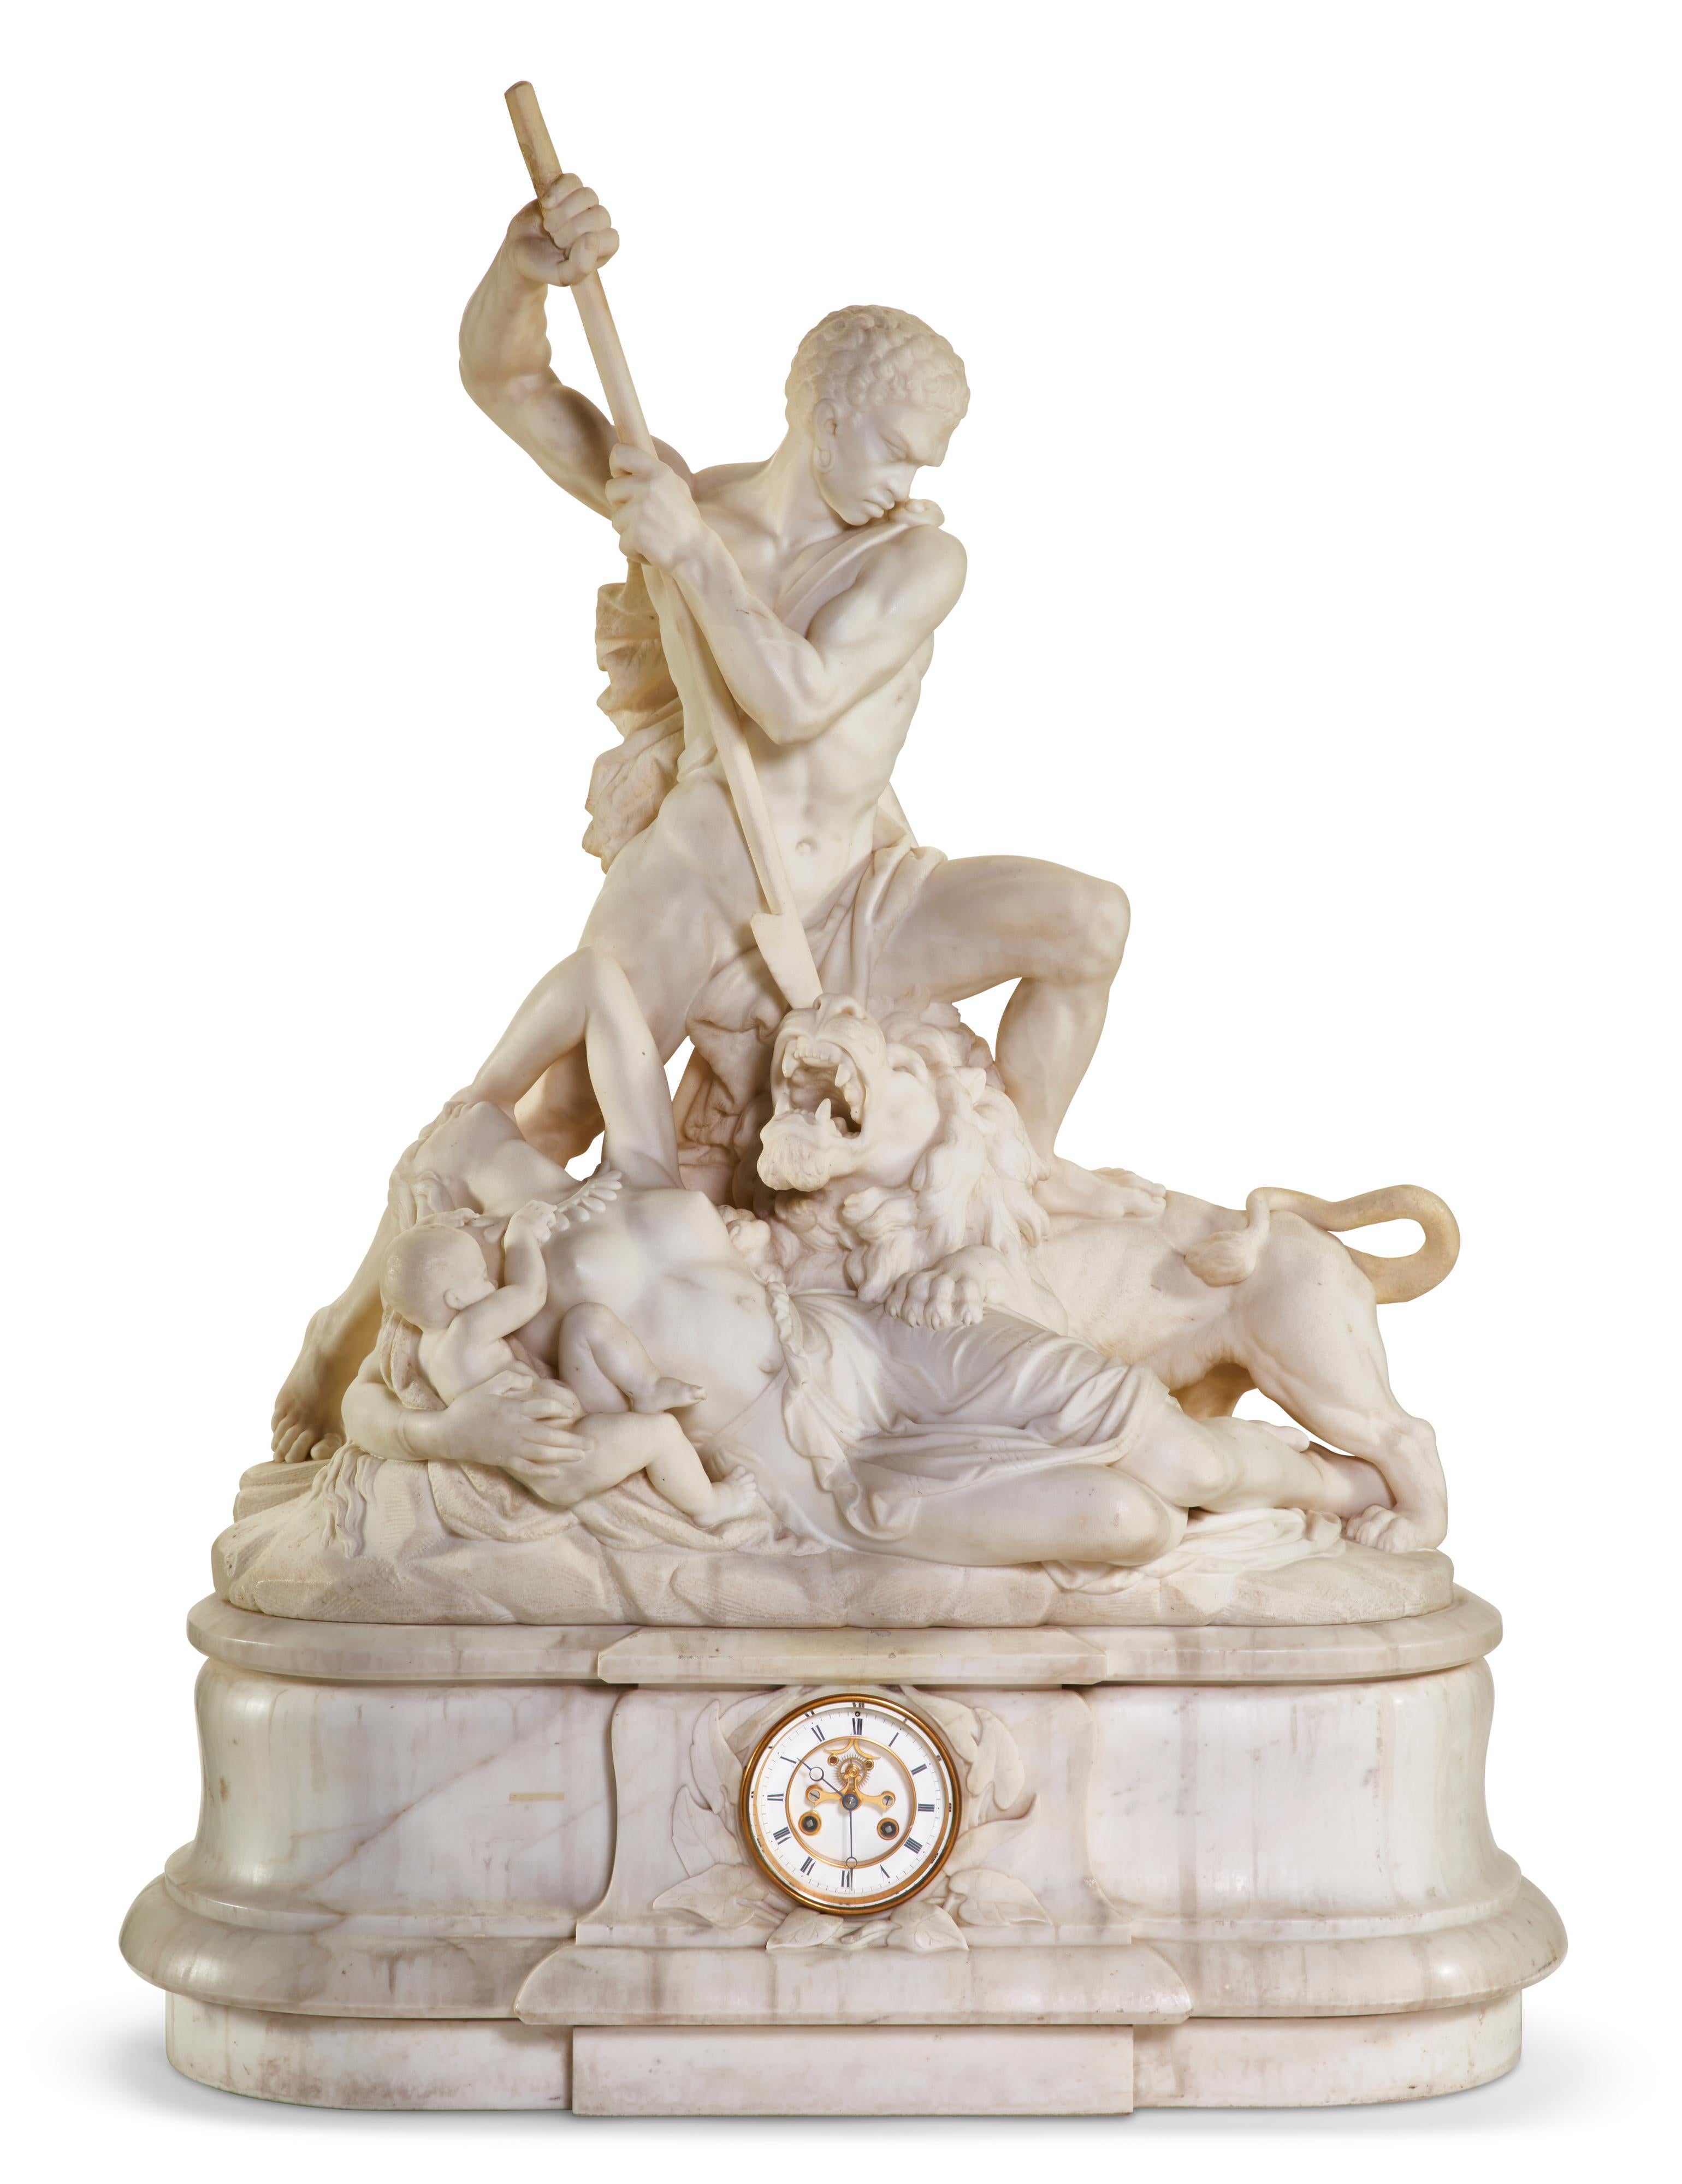 Jean-Joseph Jacquet Figurative Sculpture - An Exceptional White Marble Figural Sculpture Clock, "A Nubian Slaying The Lion"